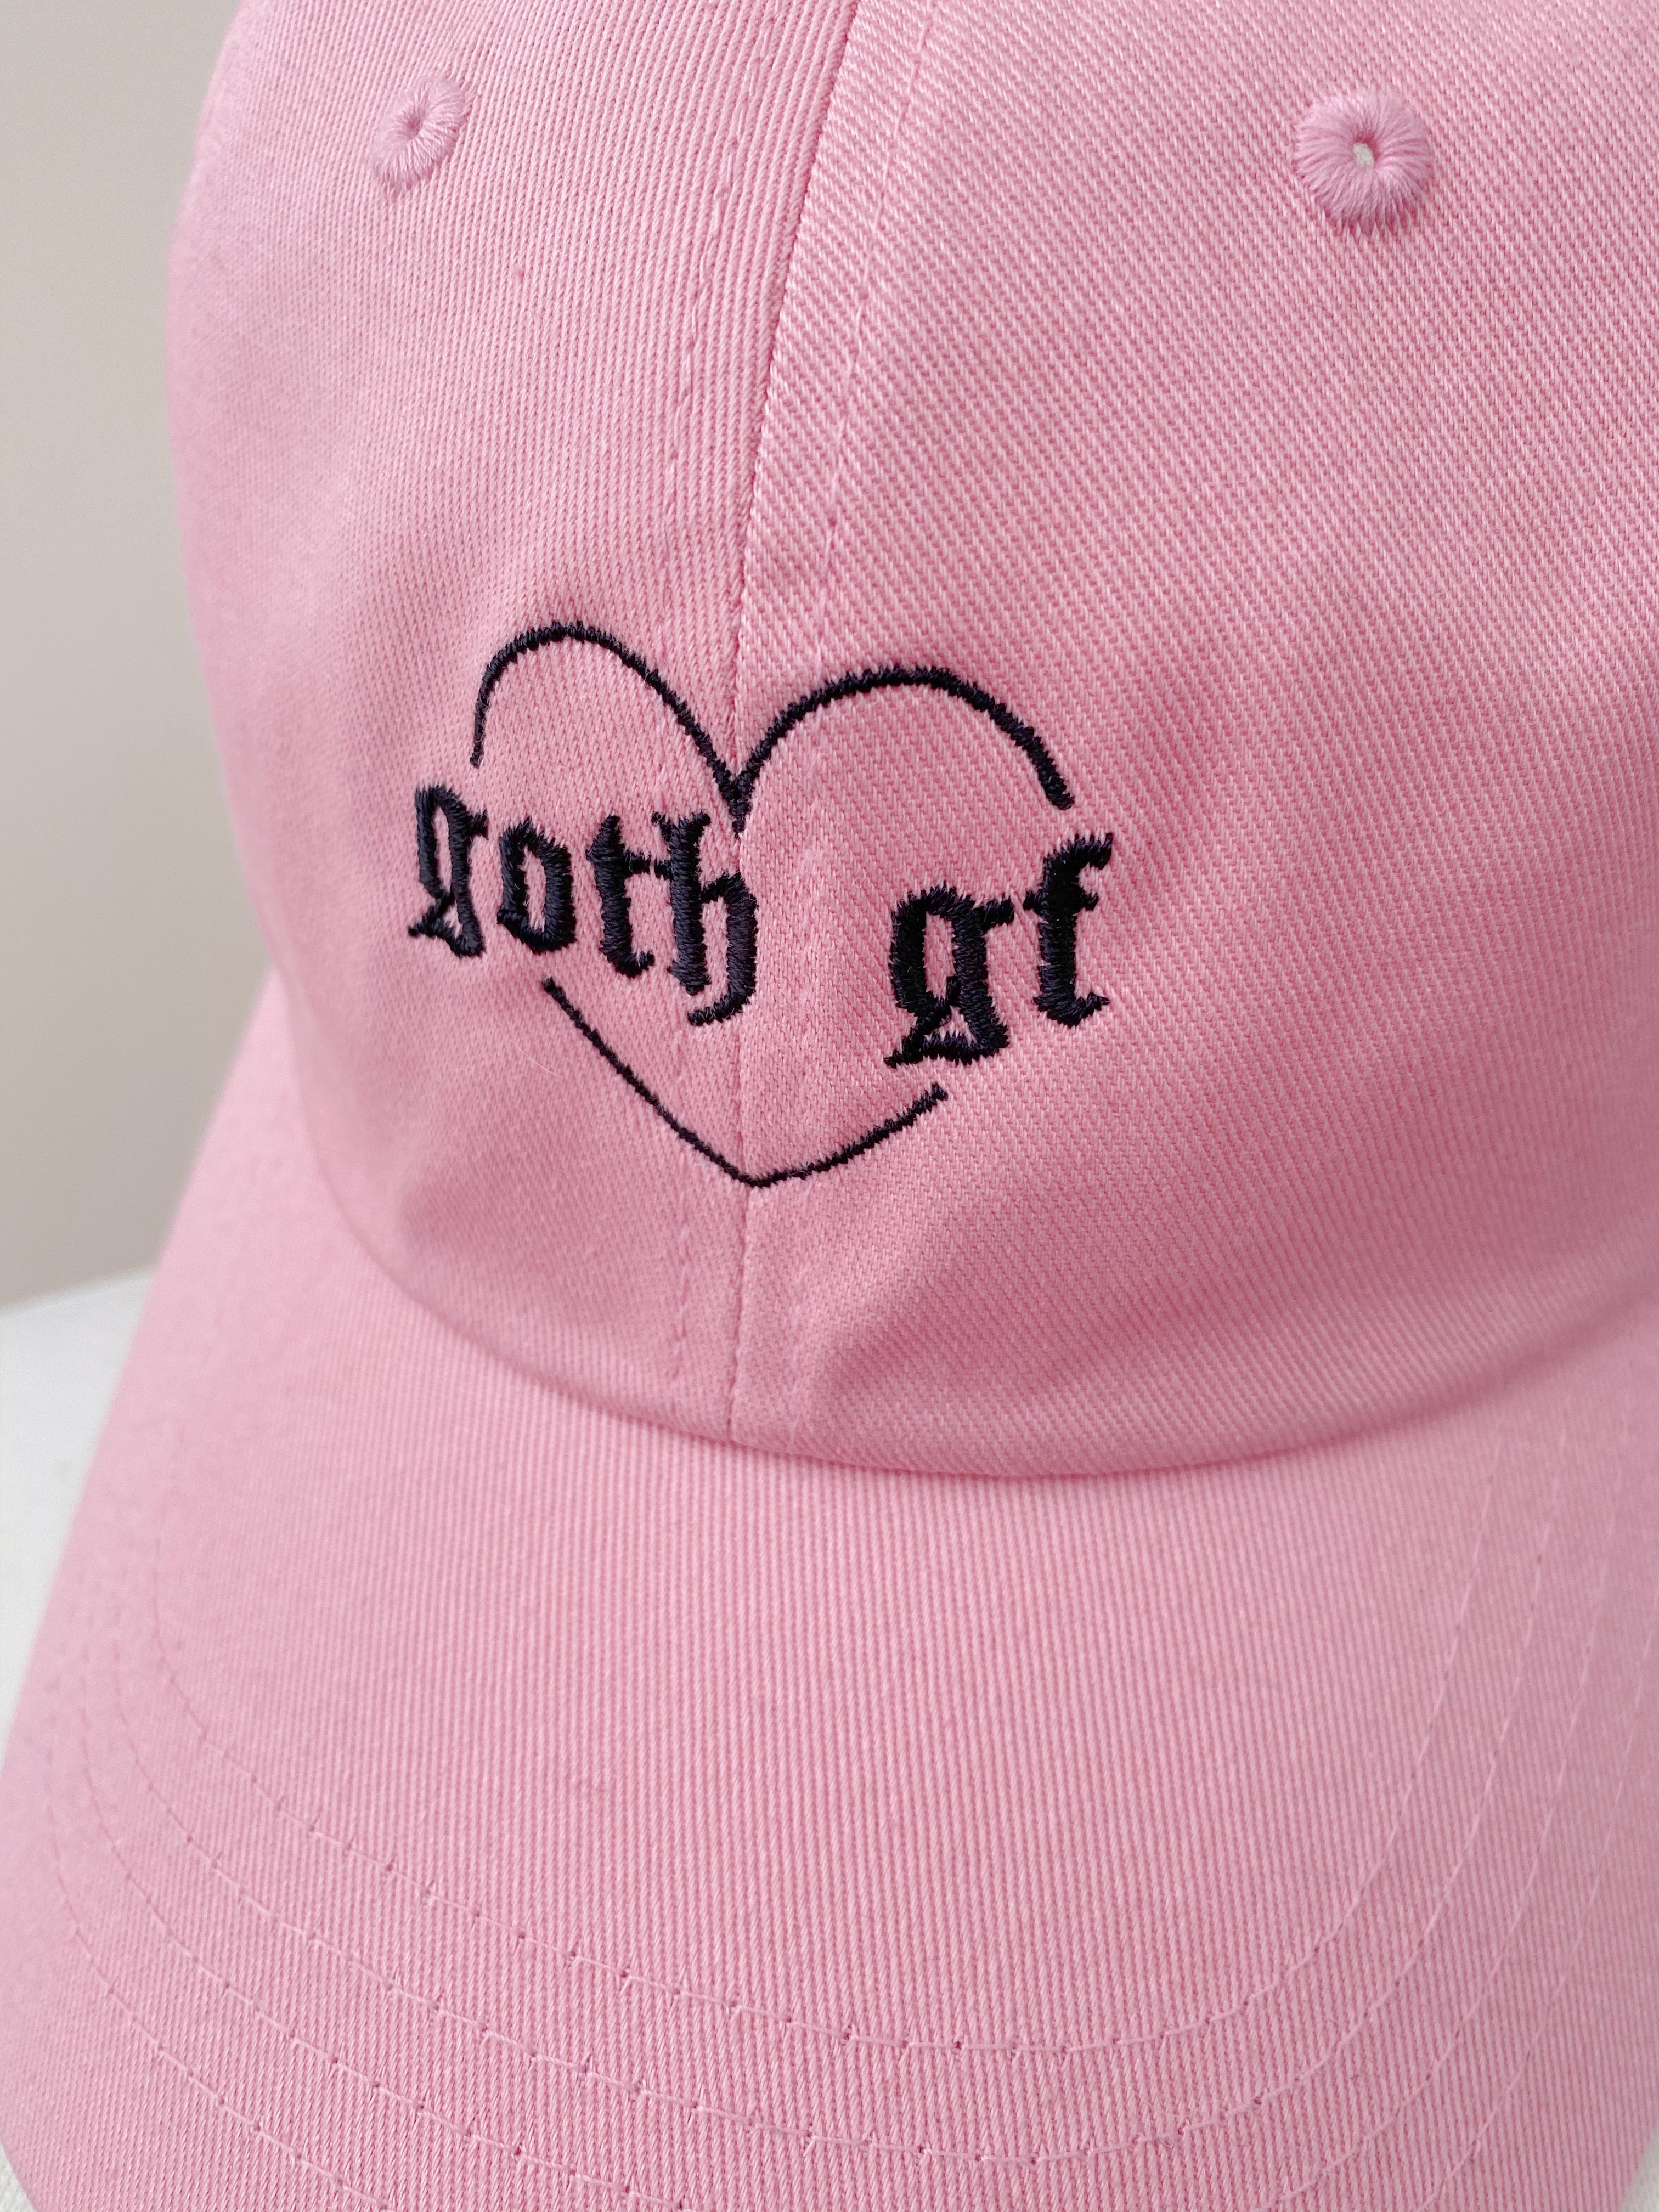 Goth gf Hat (Pink)